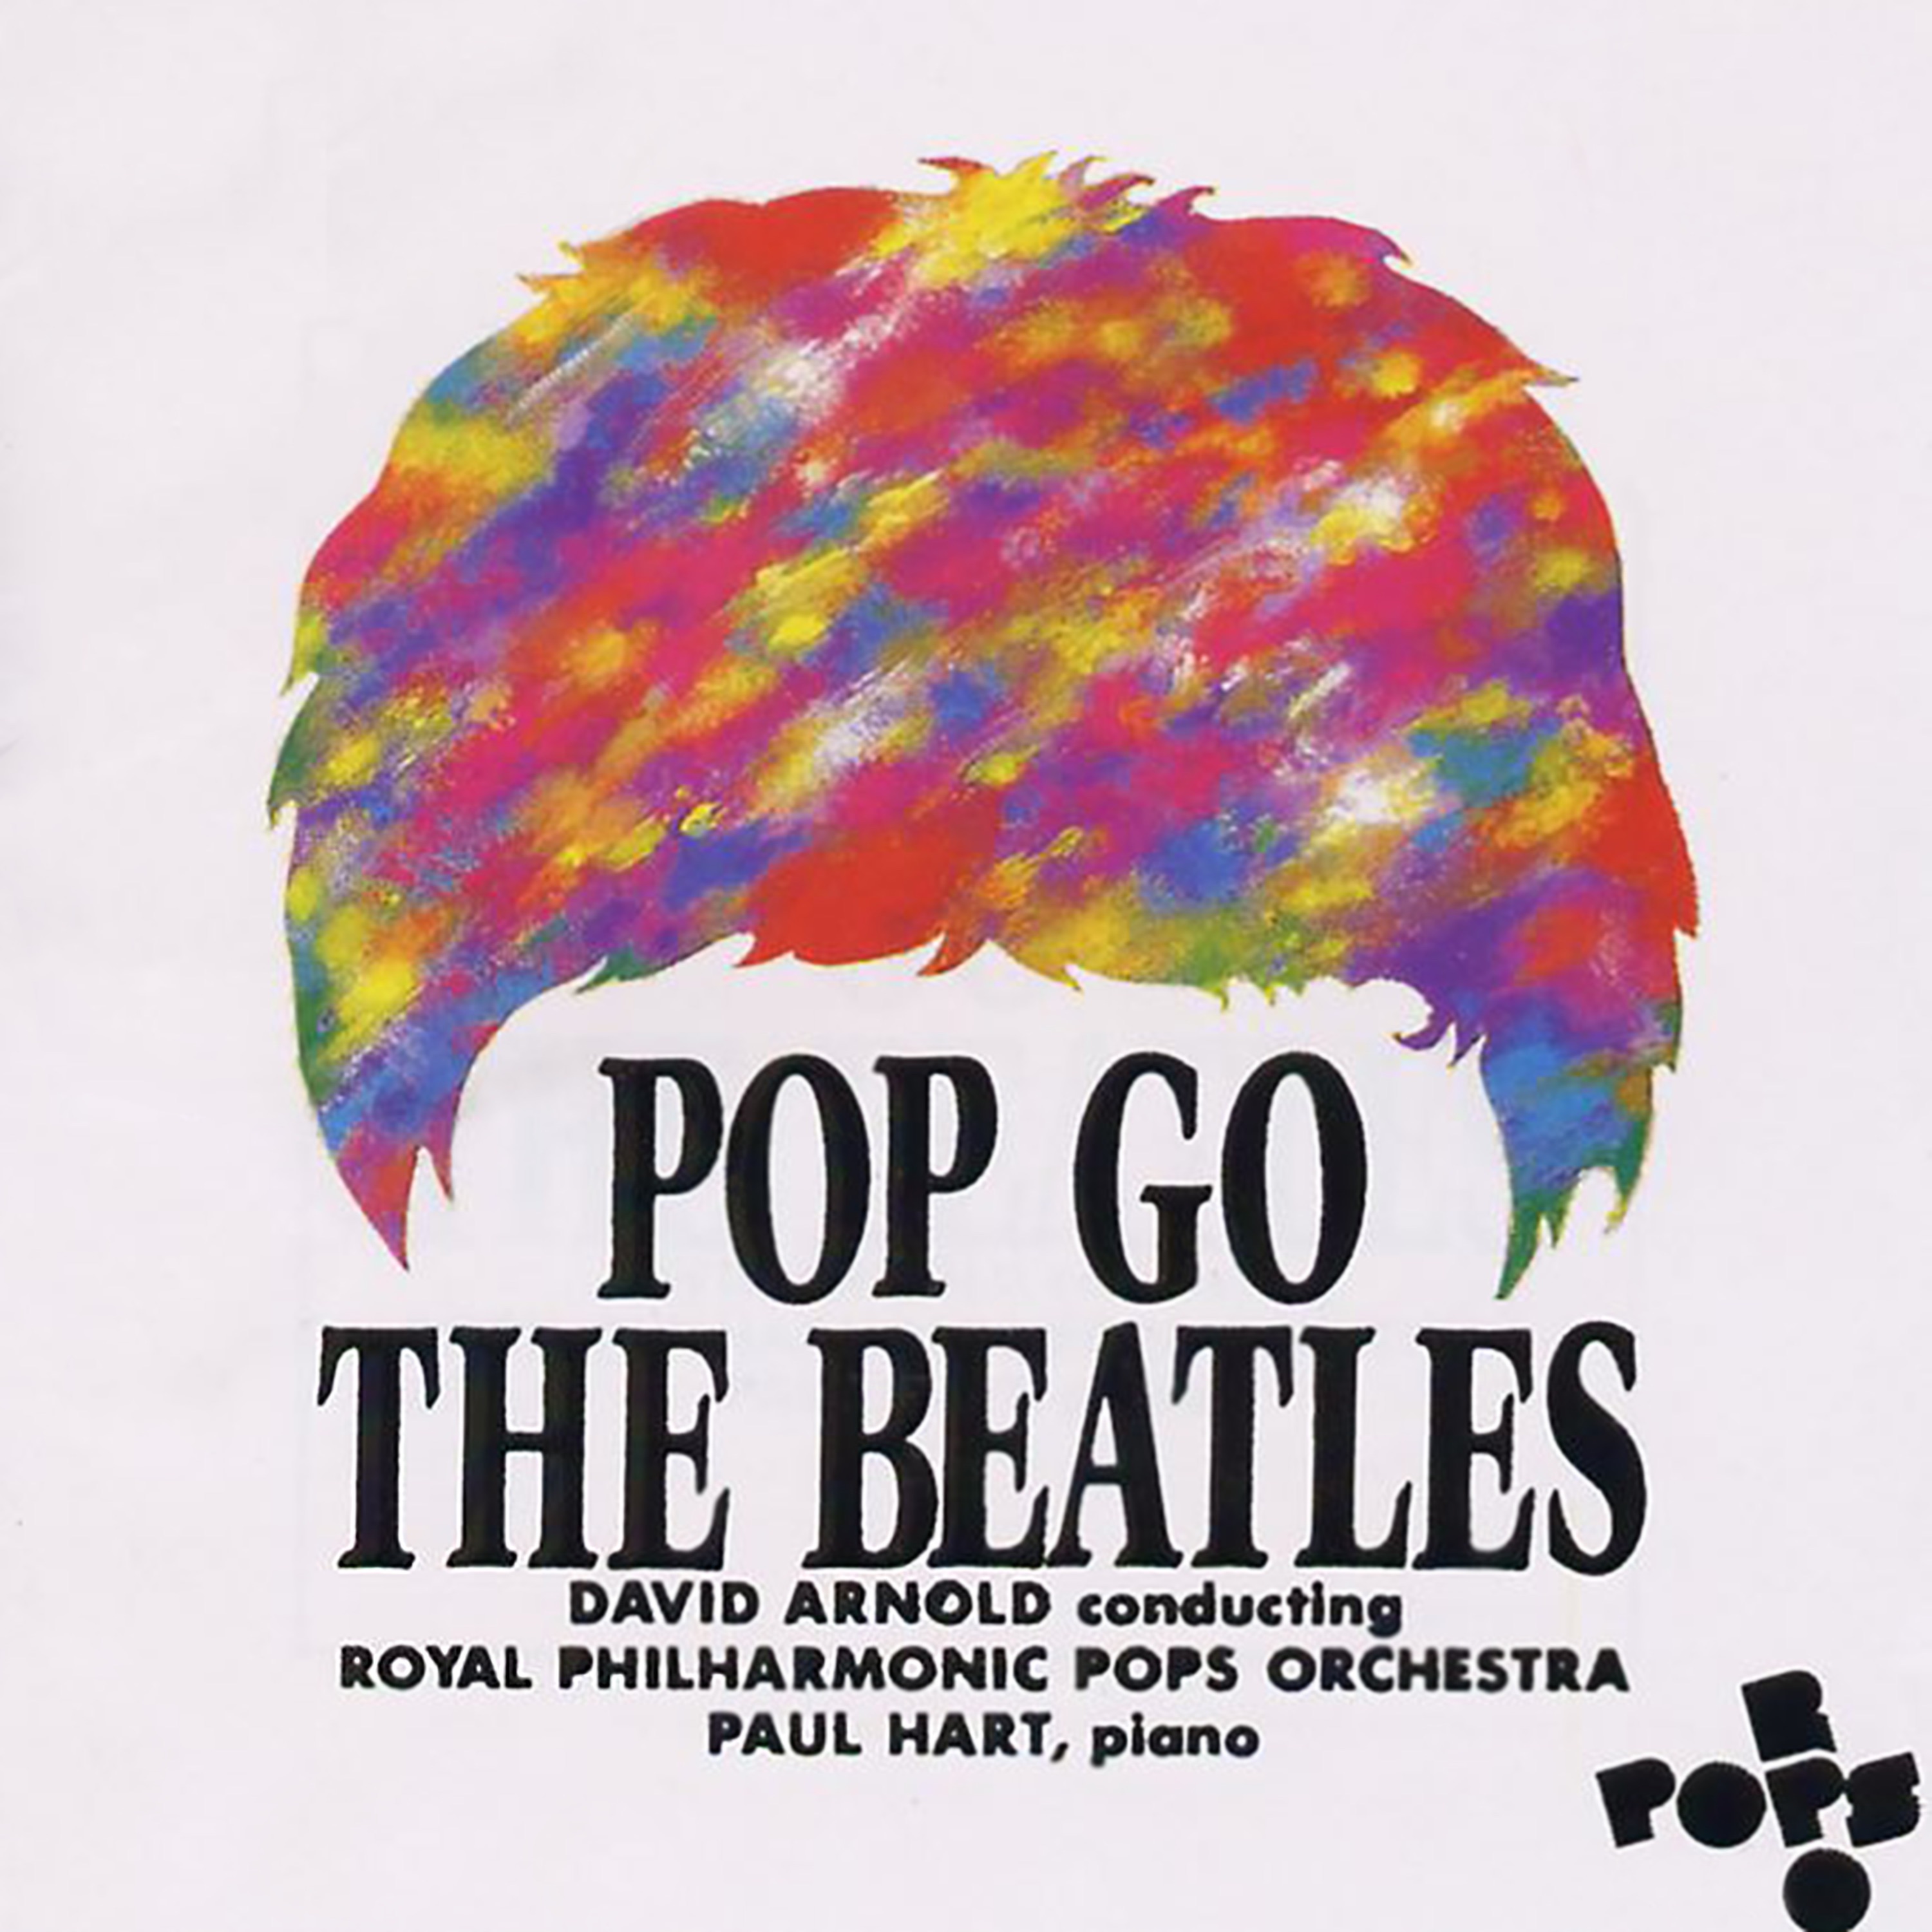 Pops orchestra. David Arnold. Paul Hart.